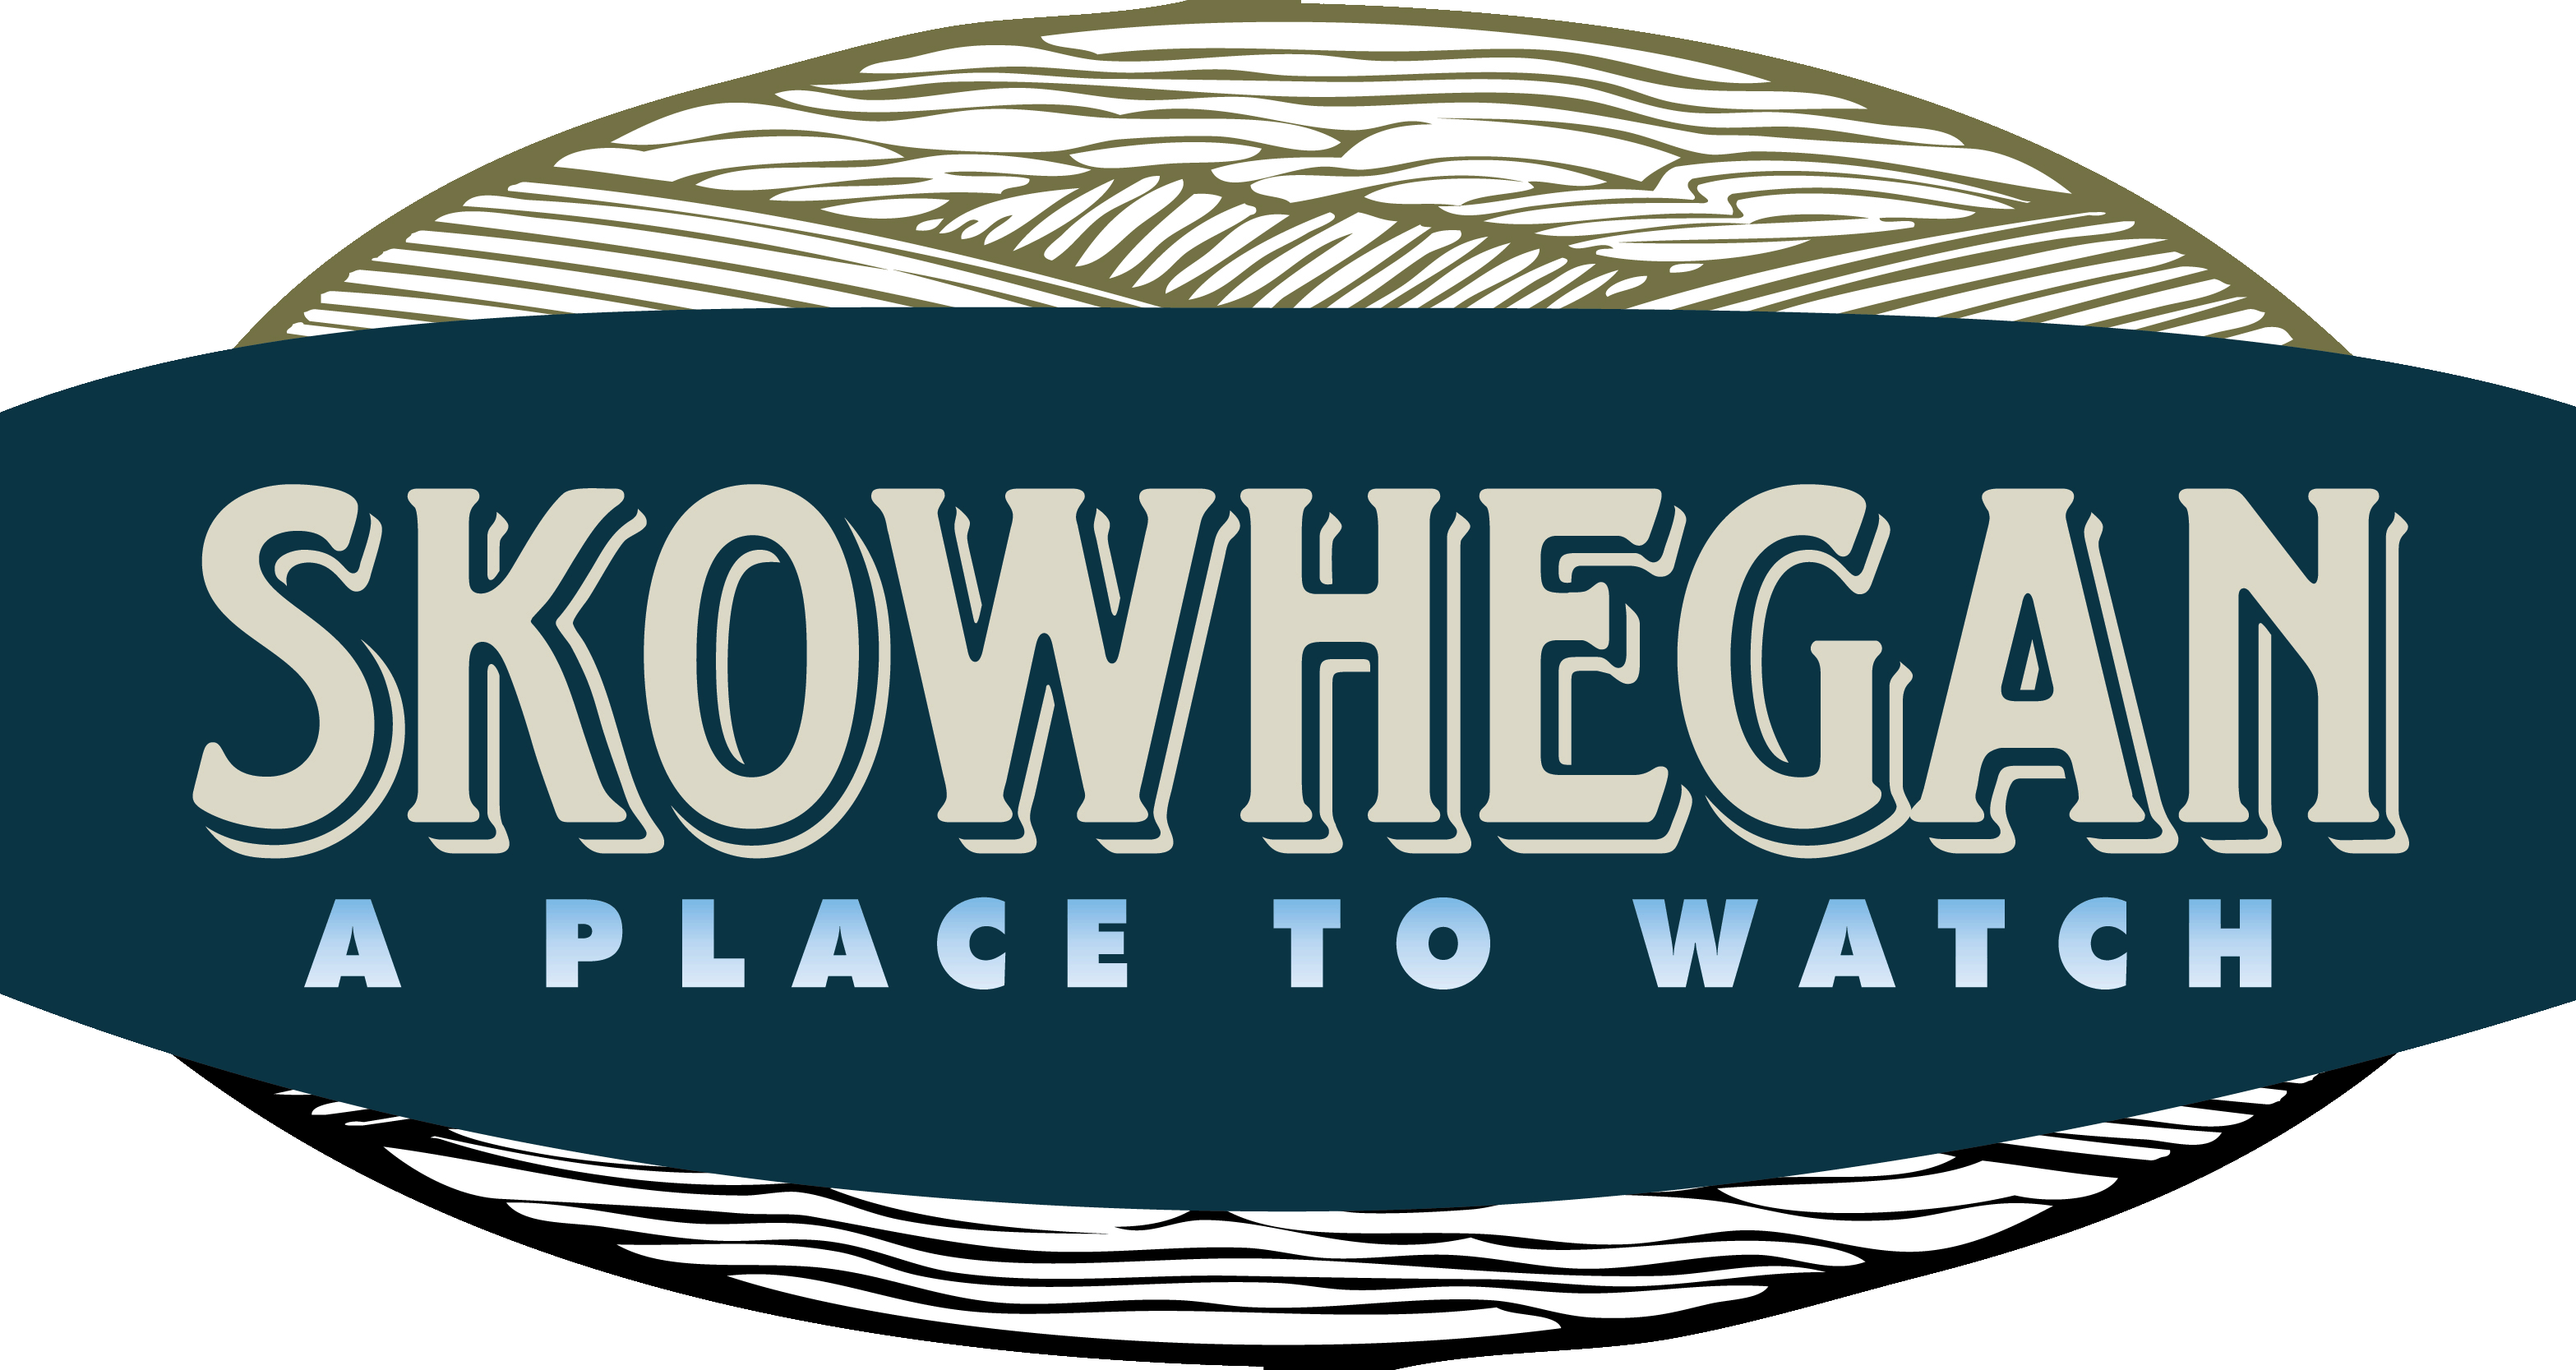 Visit Skowhegan